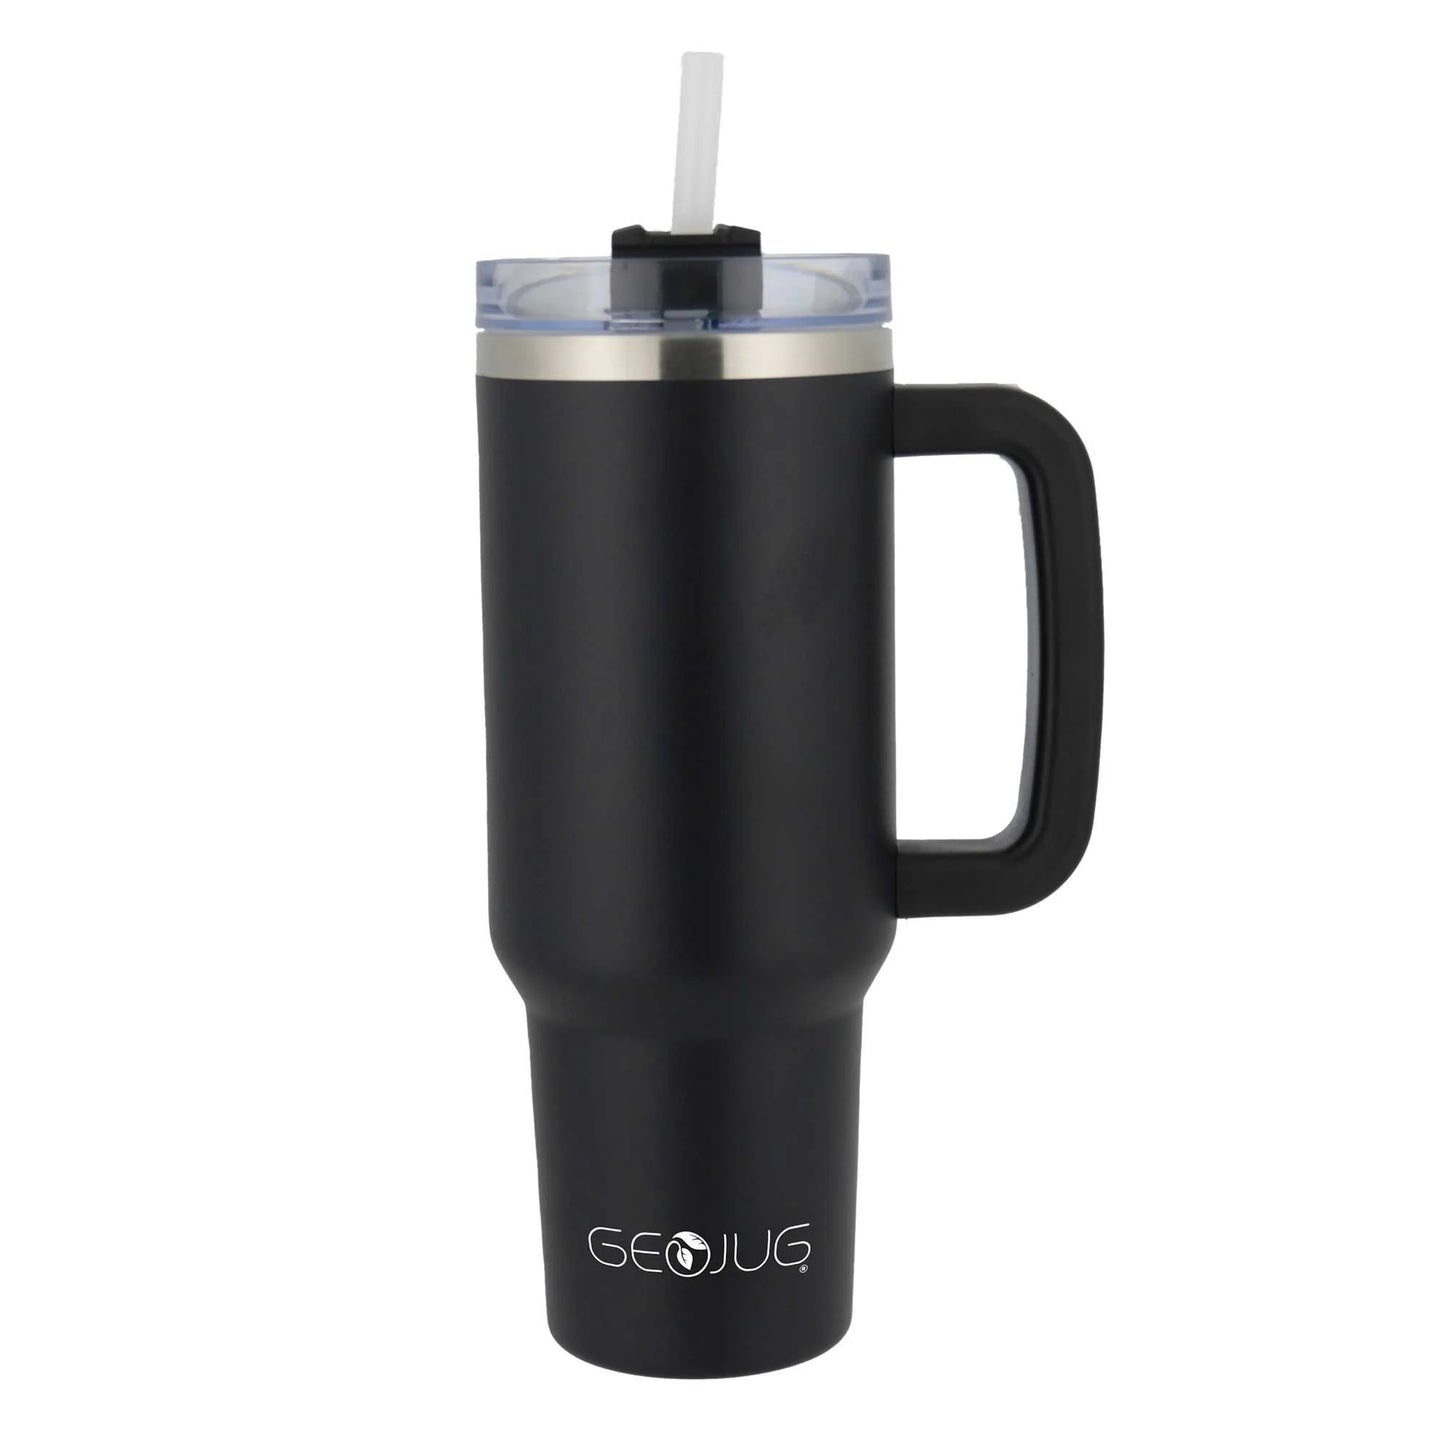 40oz GEOJUG Insulated Stainless Steel Tumbler Cup / Travel Mug